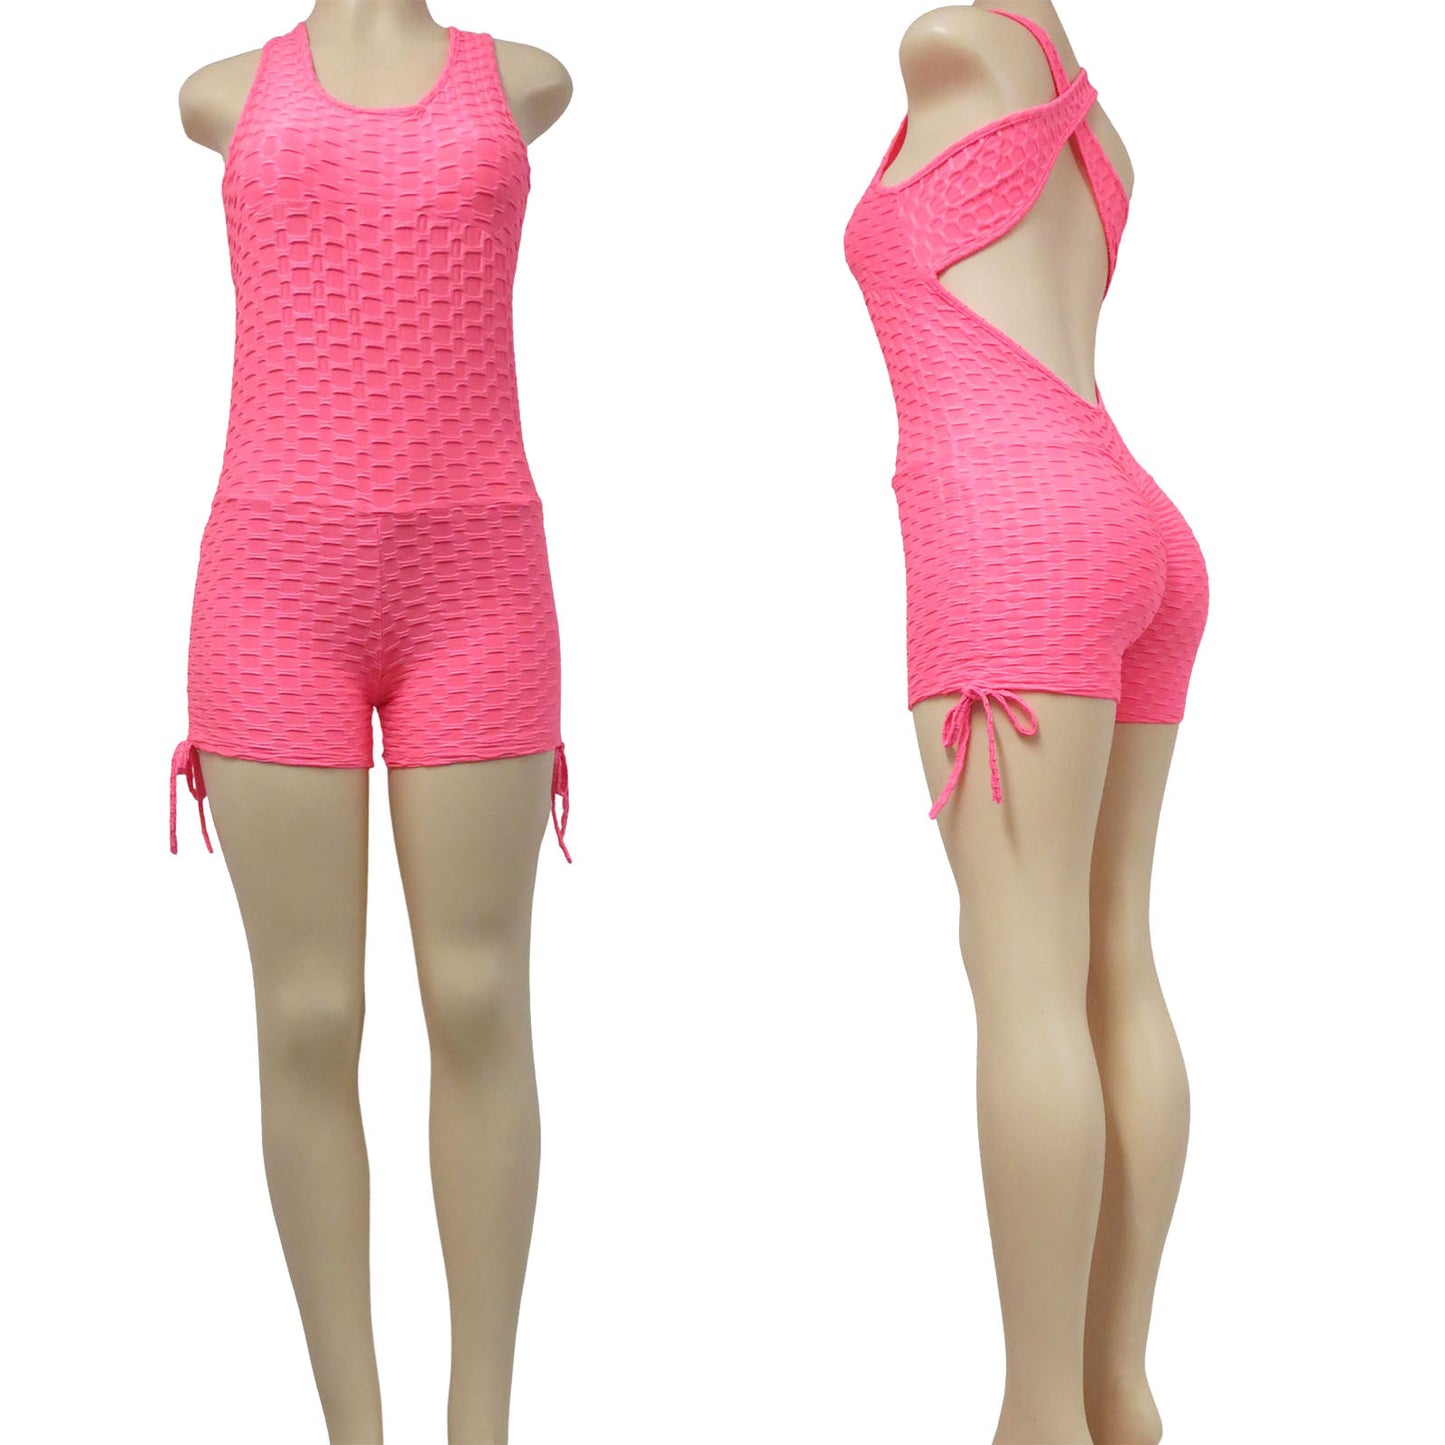 tiktok booty shorts jumper wholesale in pink bubble print